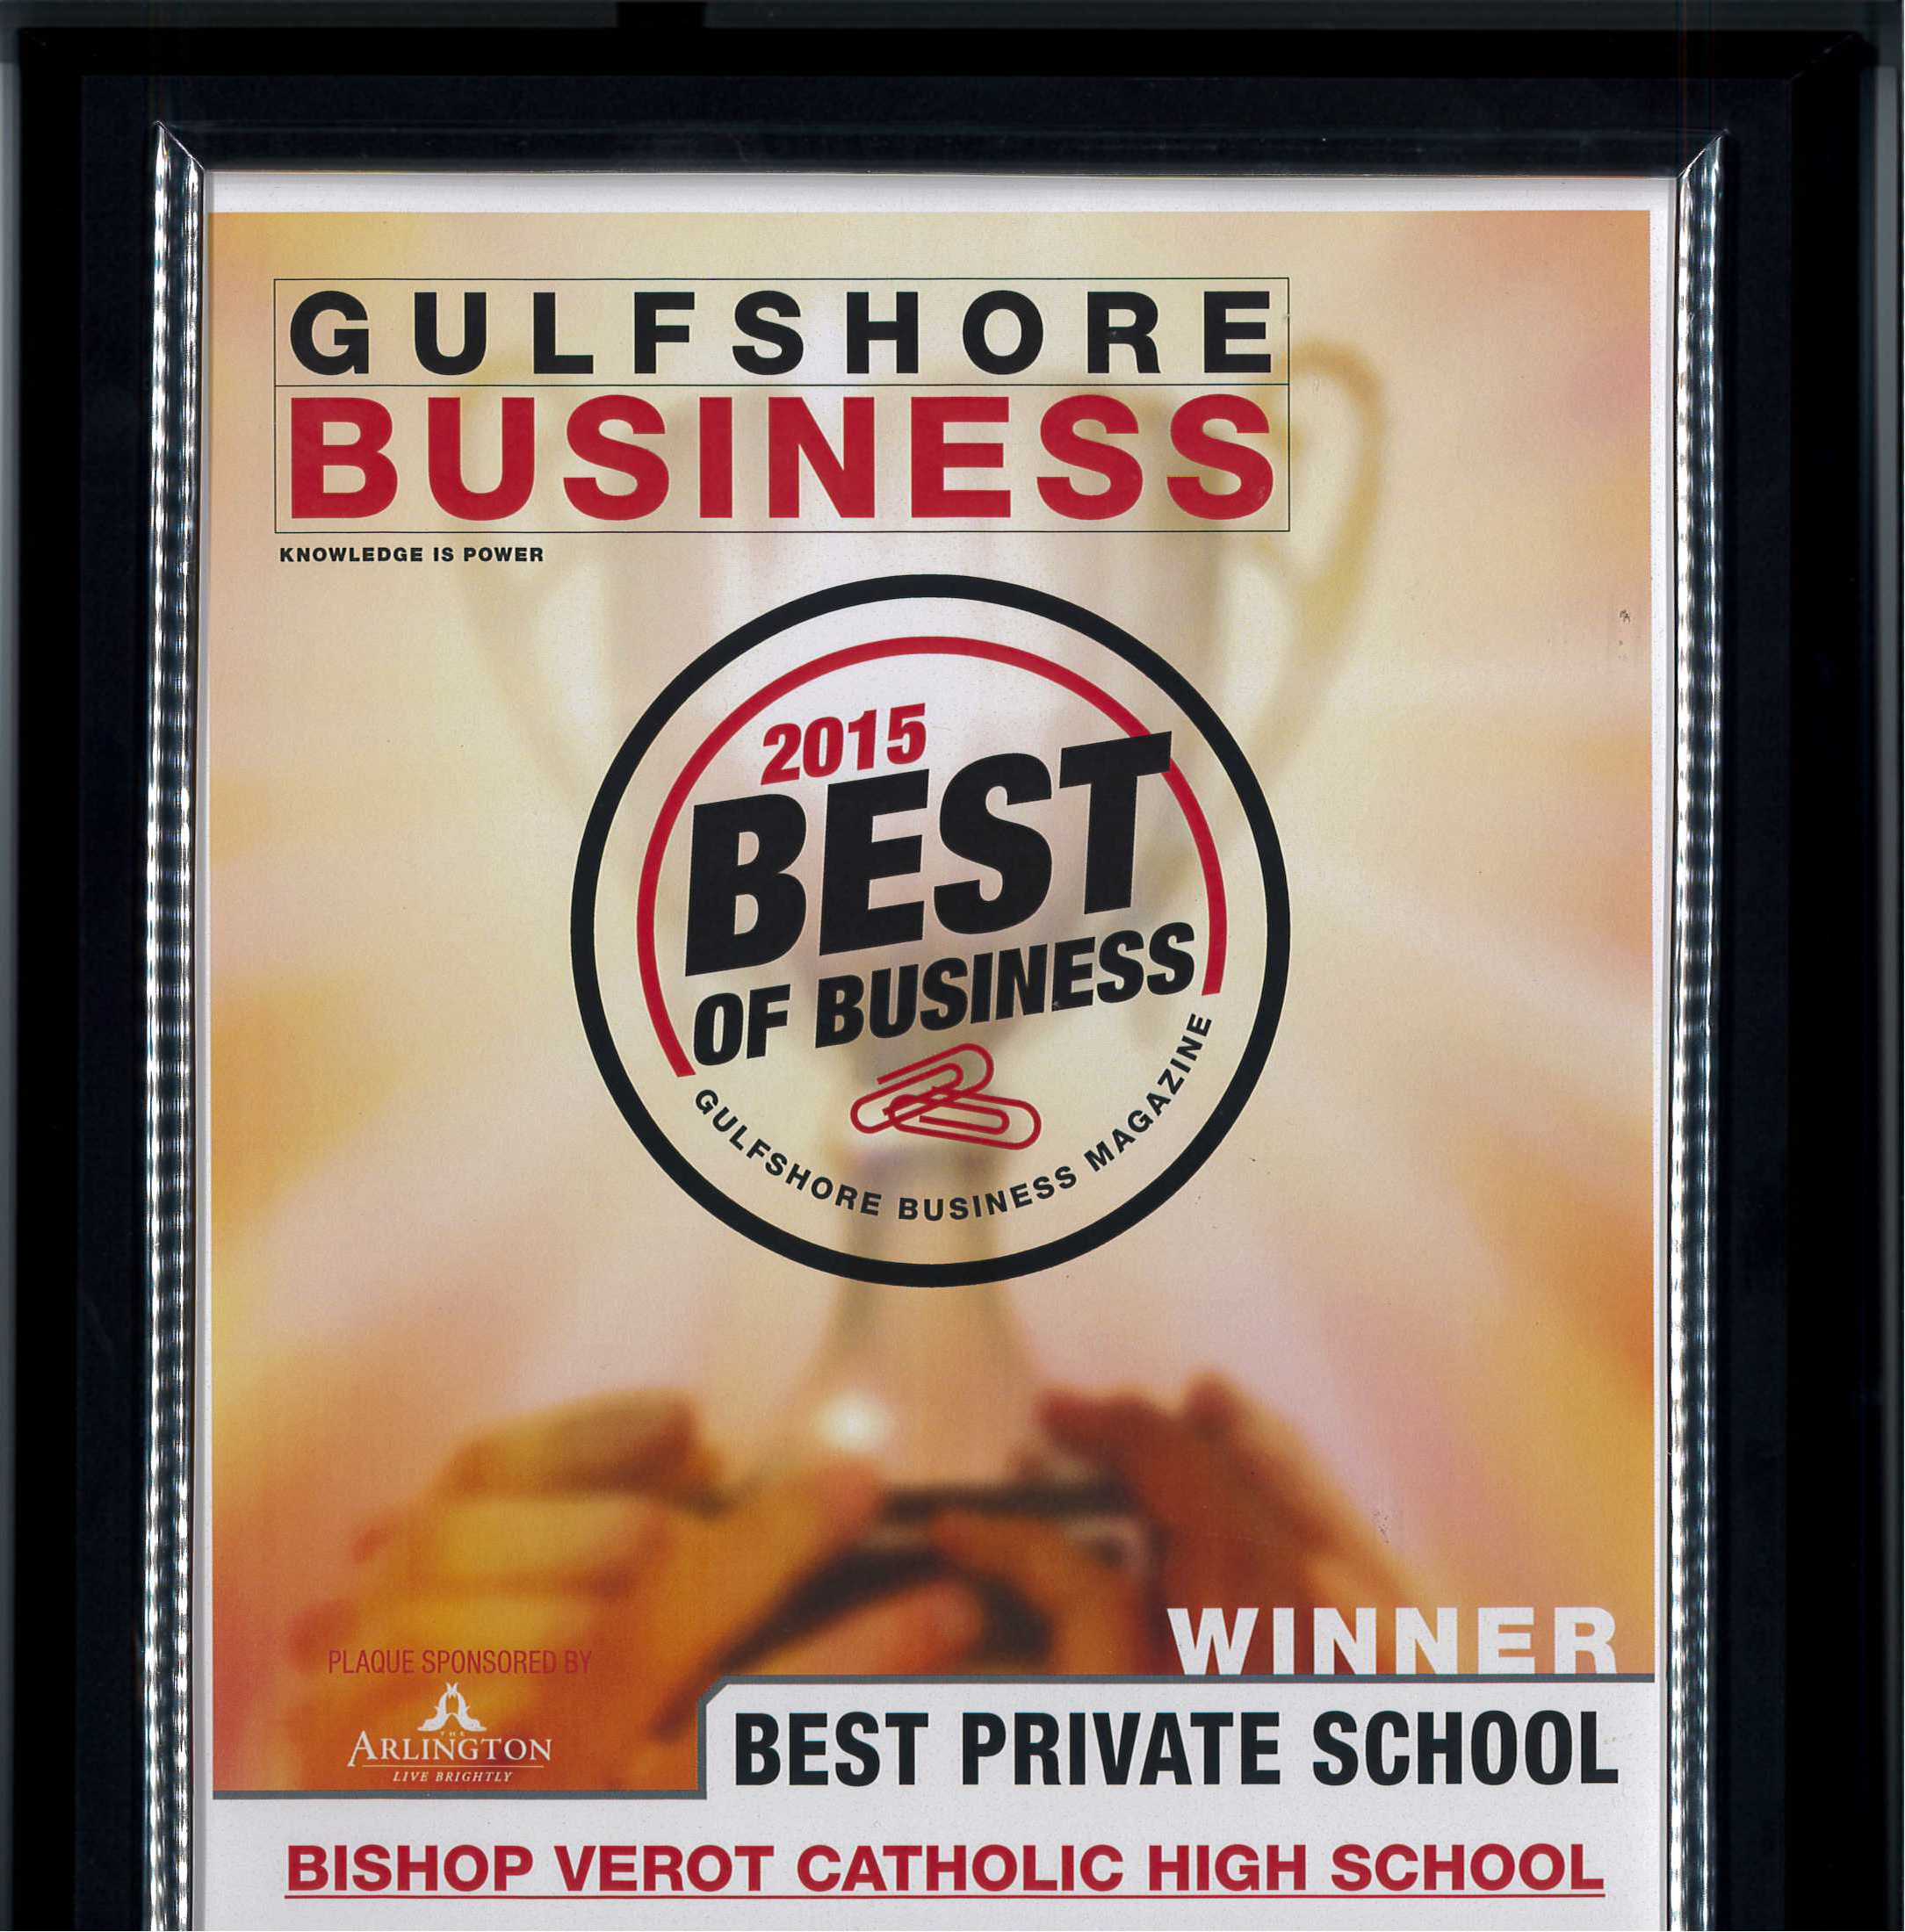 Winner...Best Private School in Gulf Shore Business' Best of Business 2015